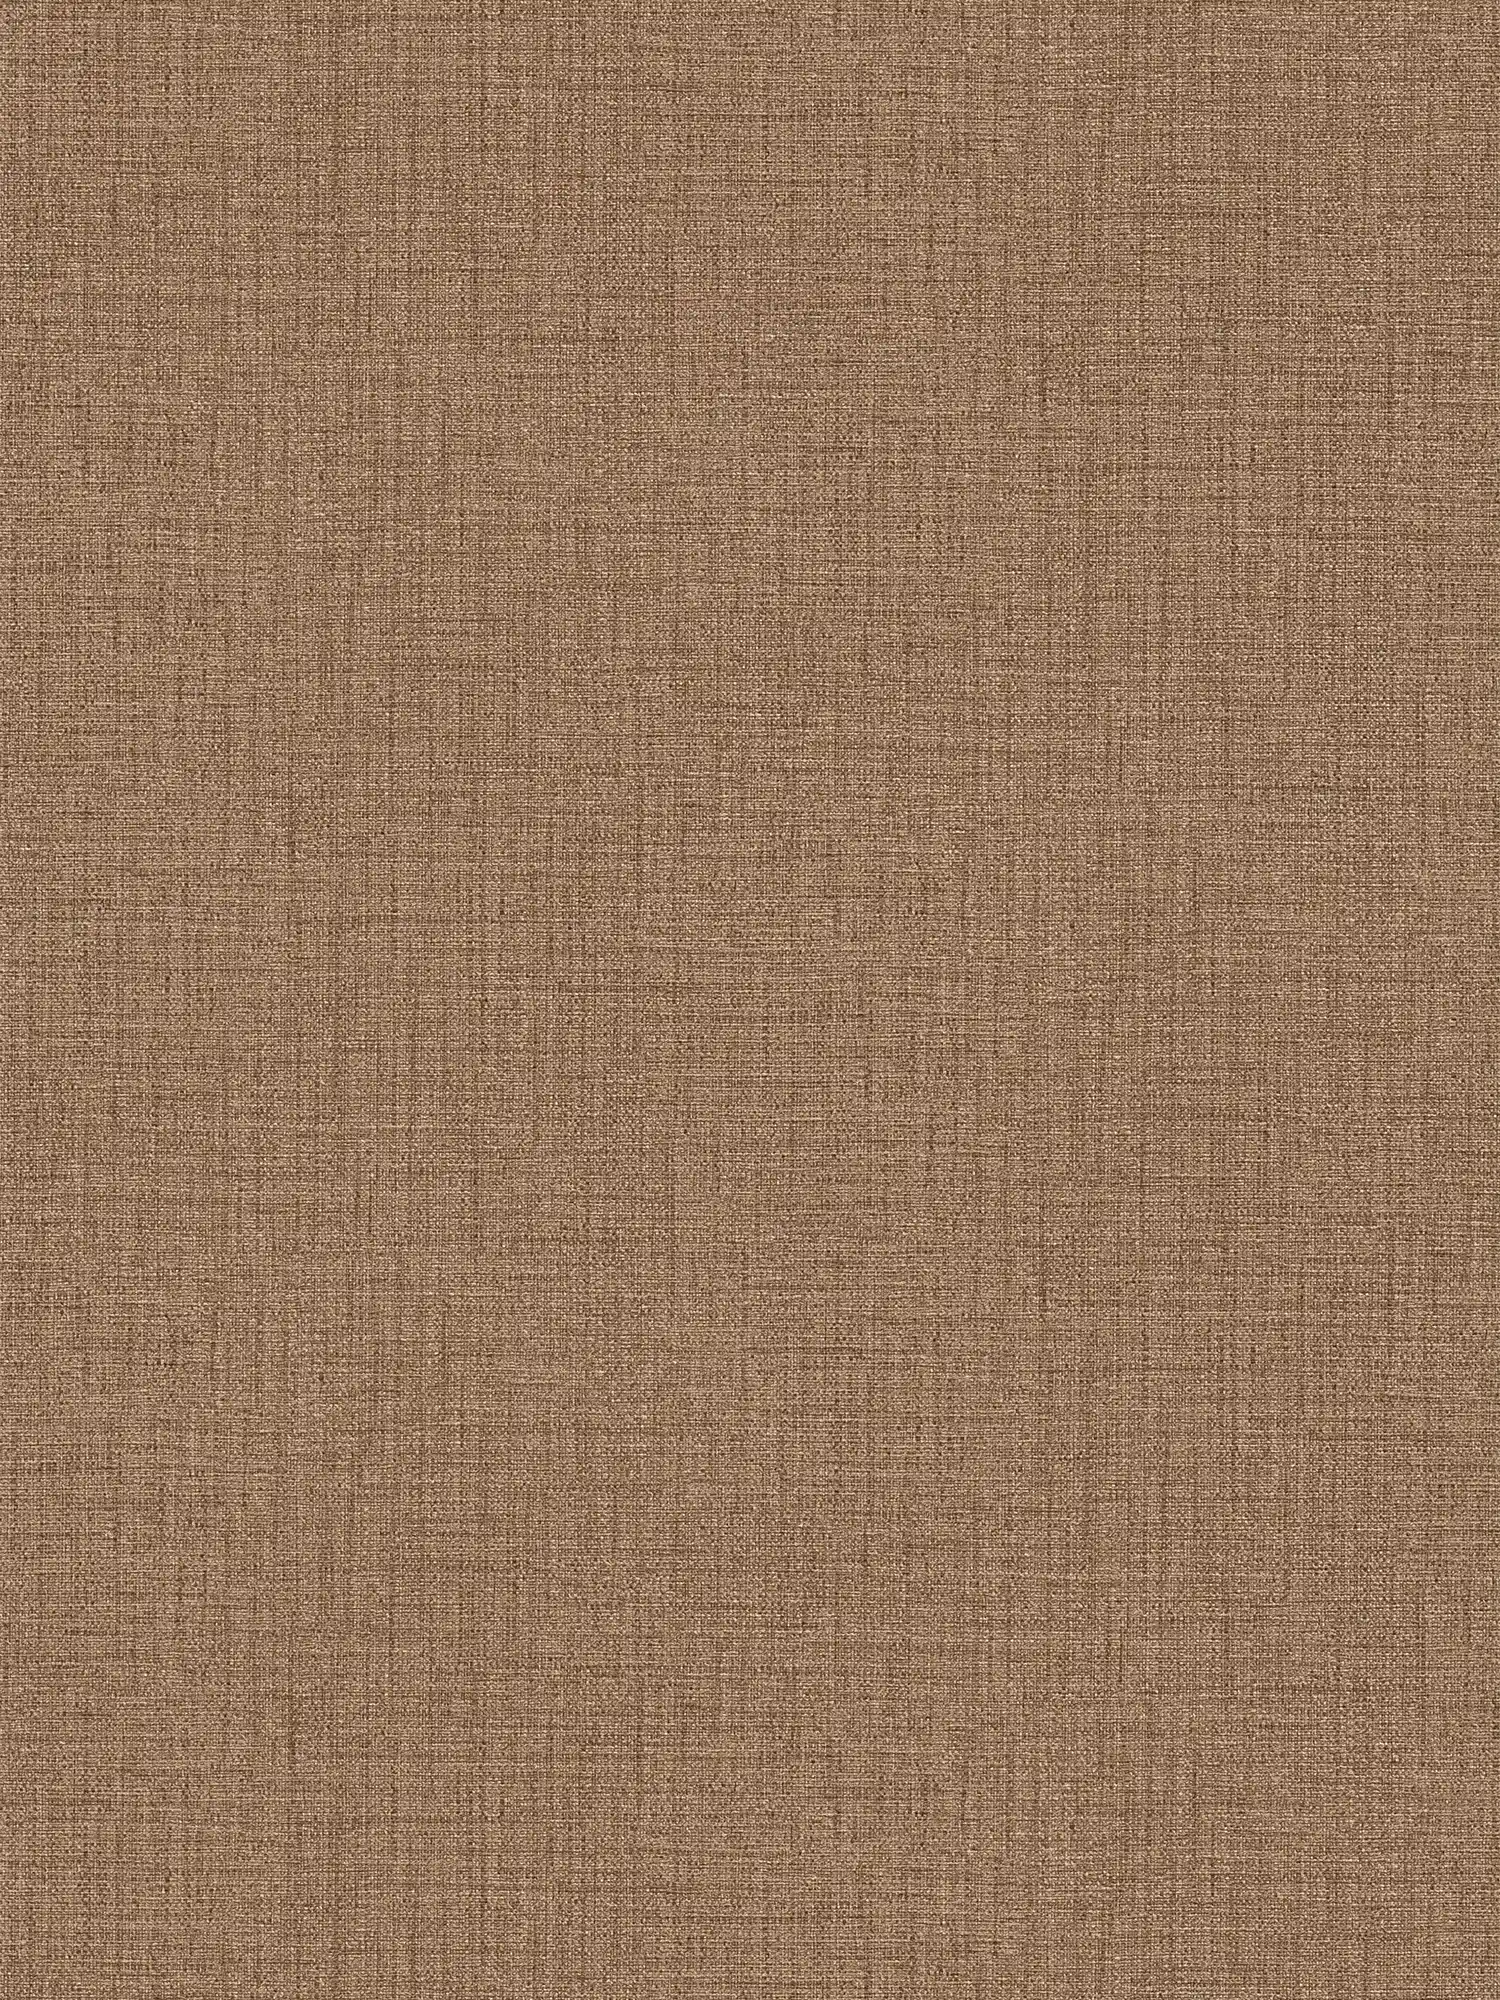 Non-woven wallpaper brown with textile optics & structure design
